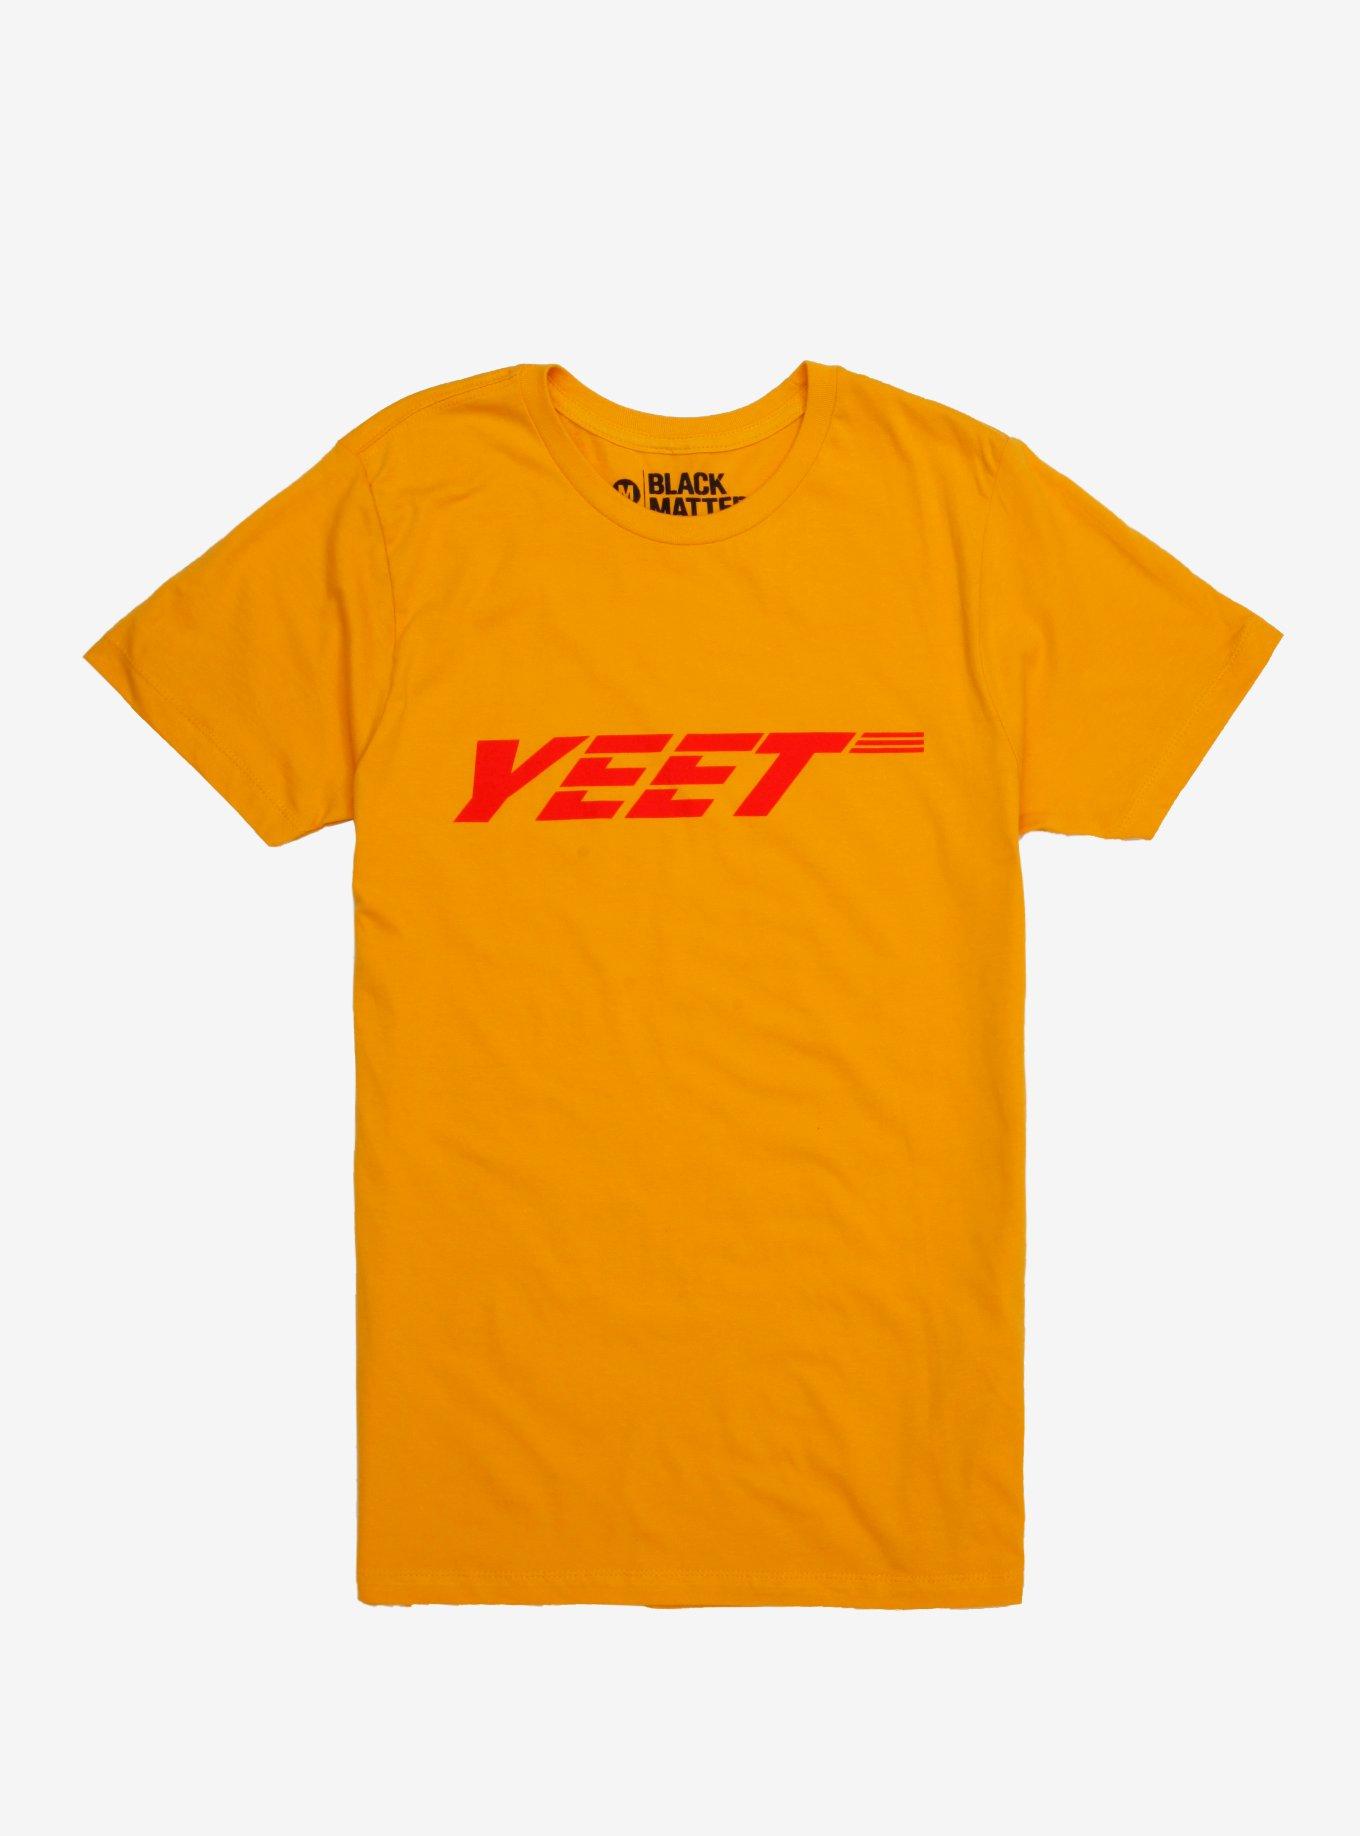 Yeet T-Shirt, BLACK, hi-res